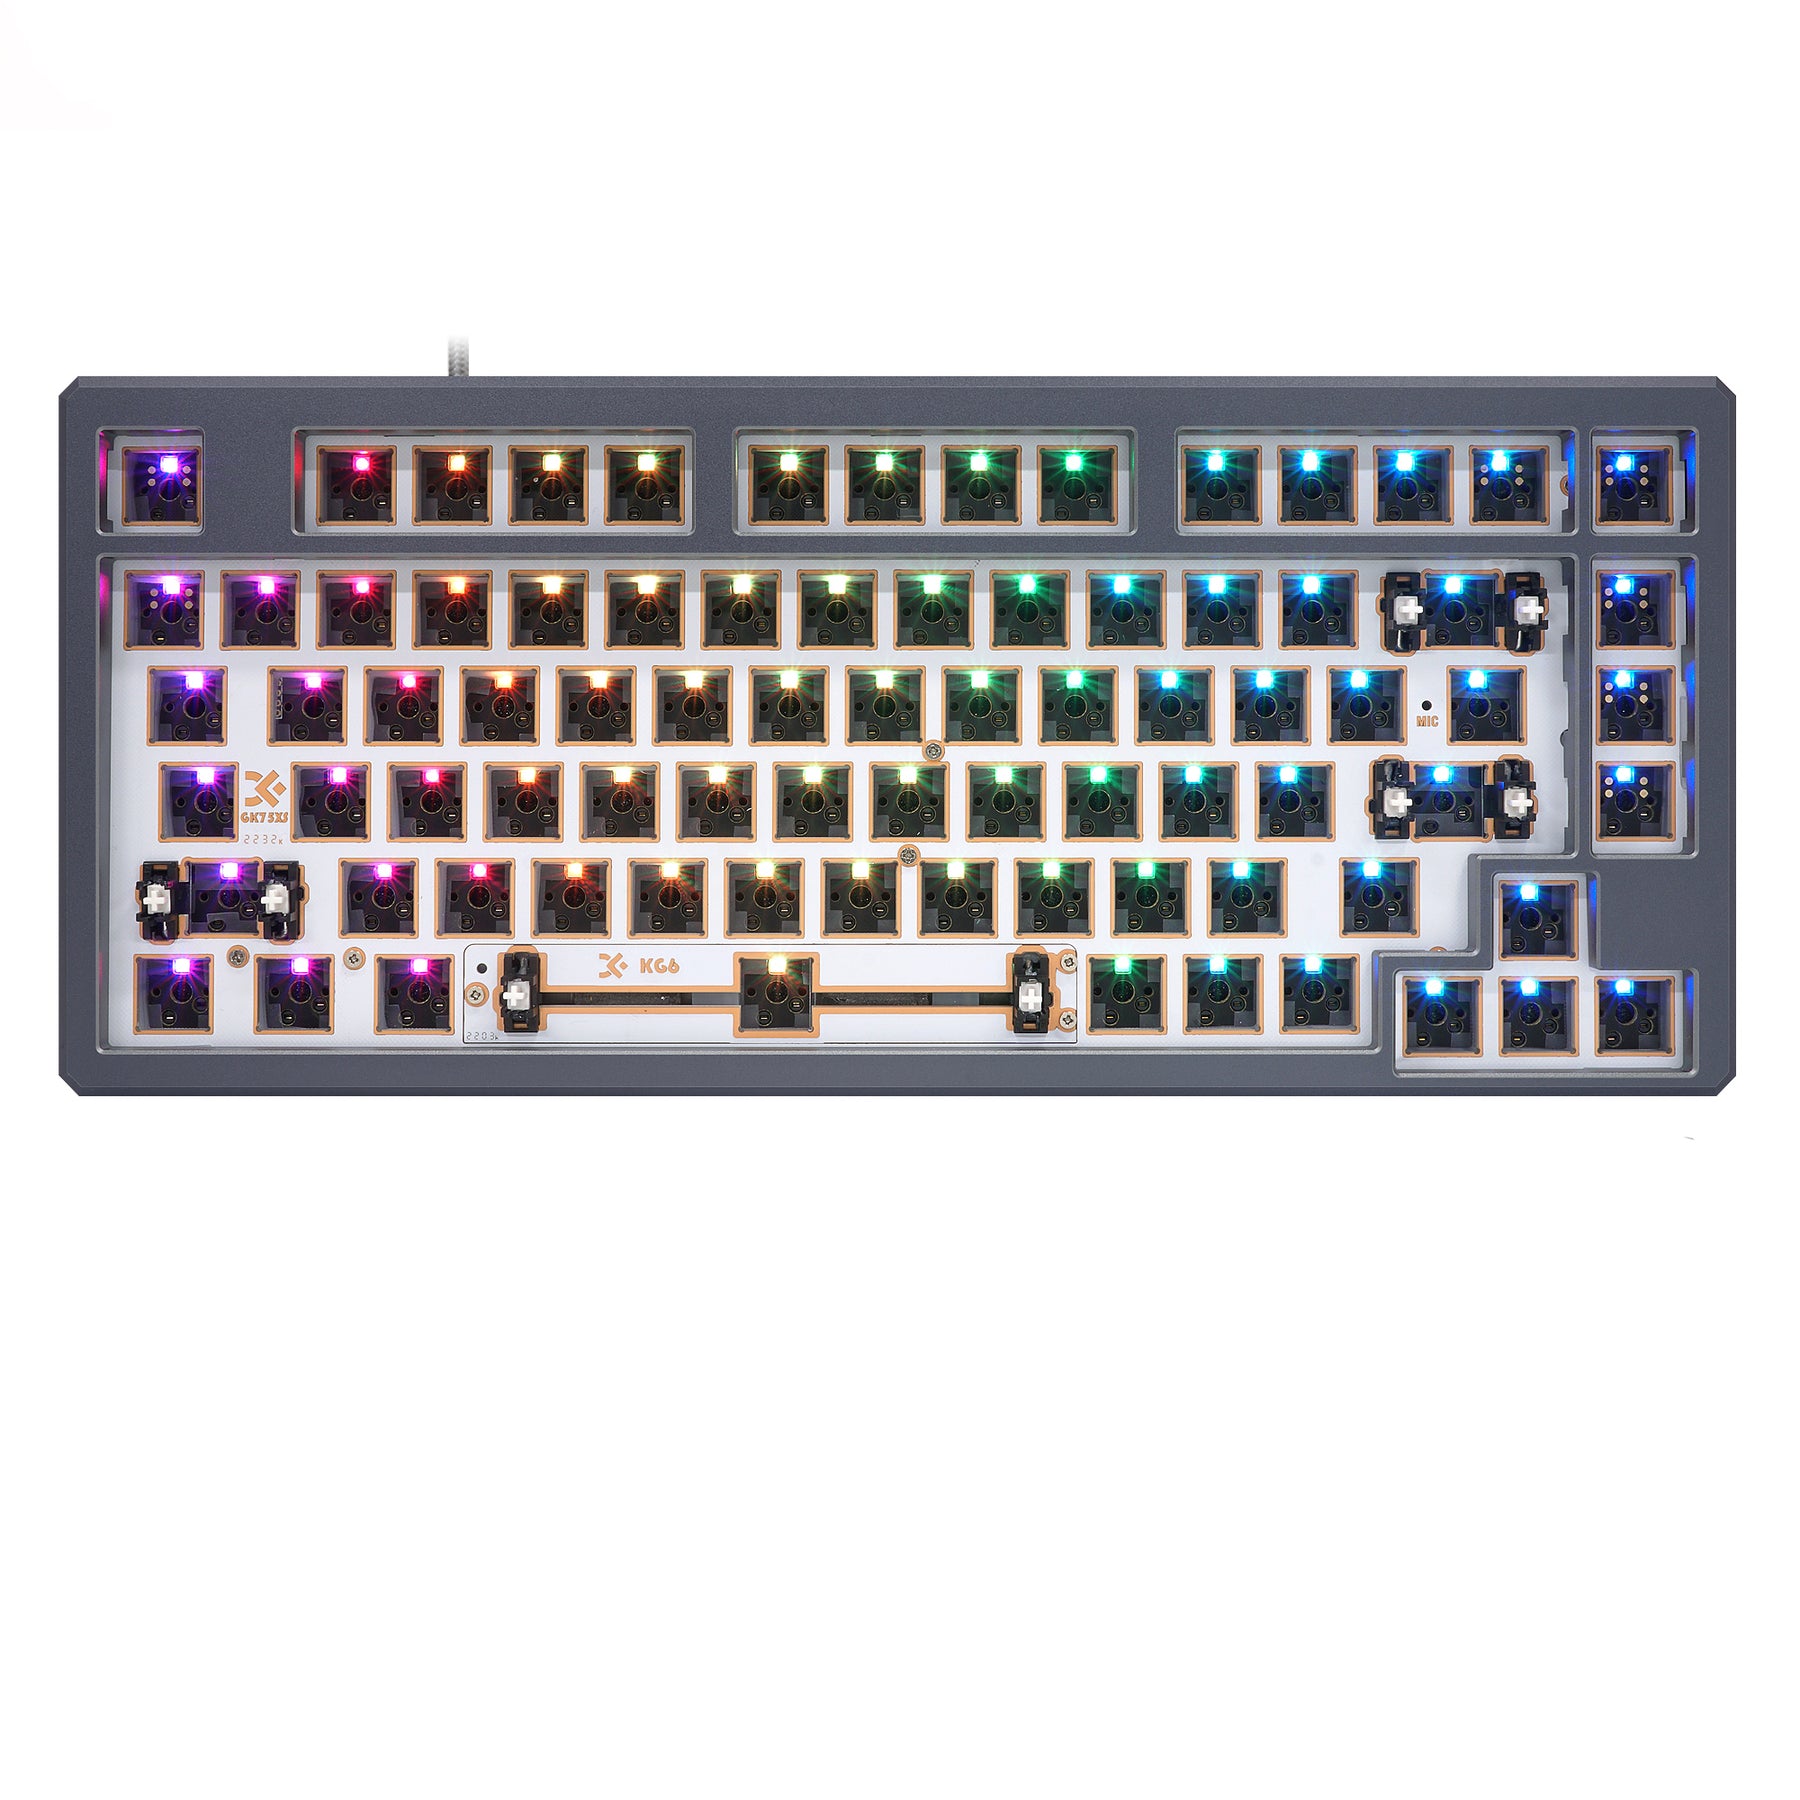 YUNZII GK75 Lite-Gasket Keyboard Kit with CNC Aluminum Keyboard Case